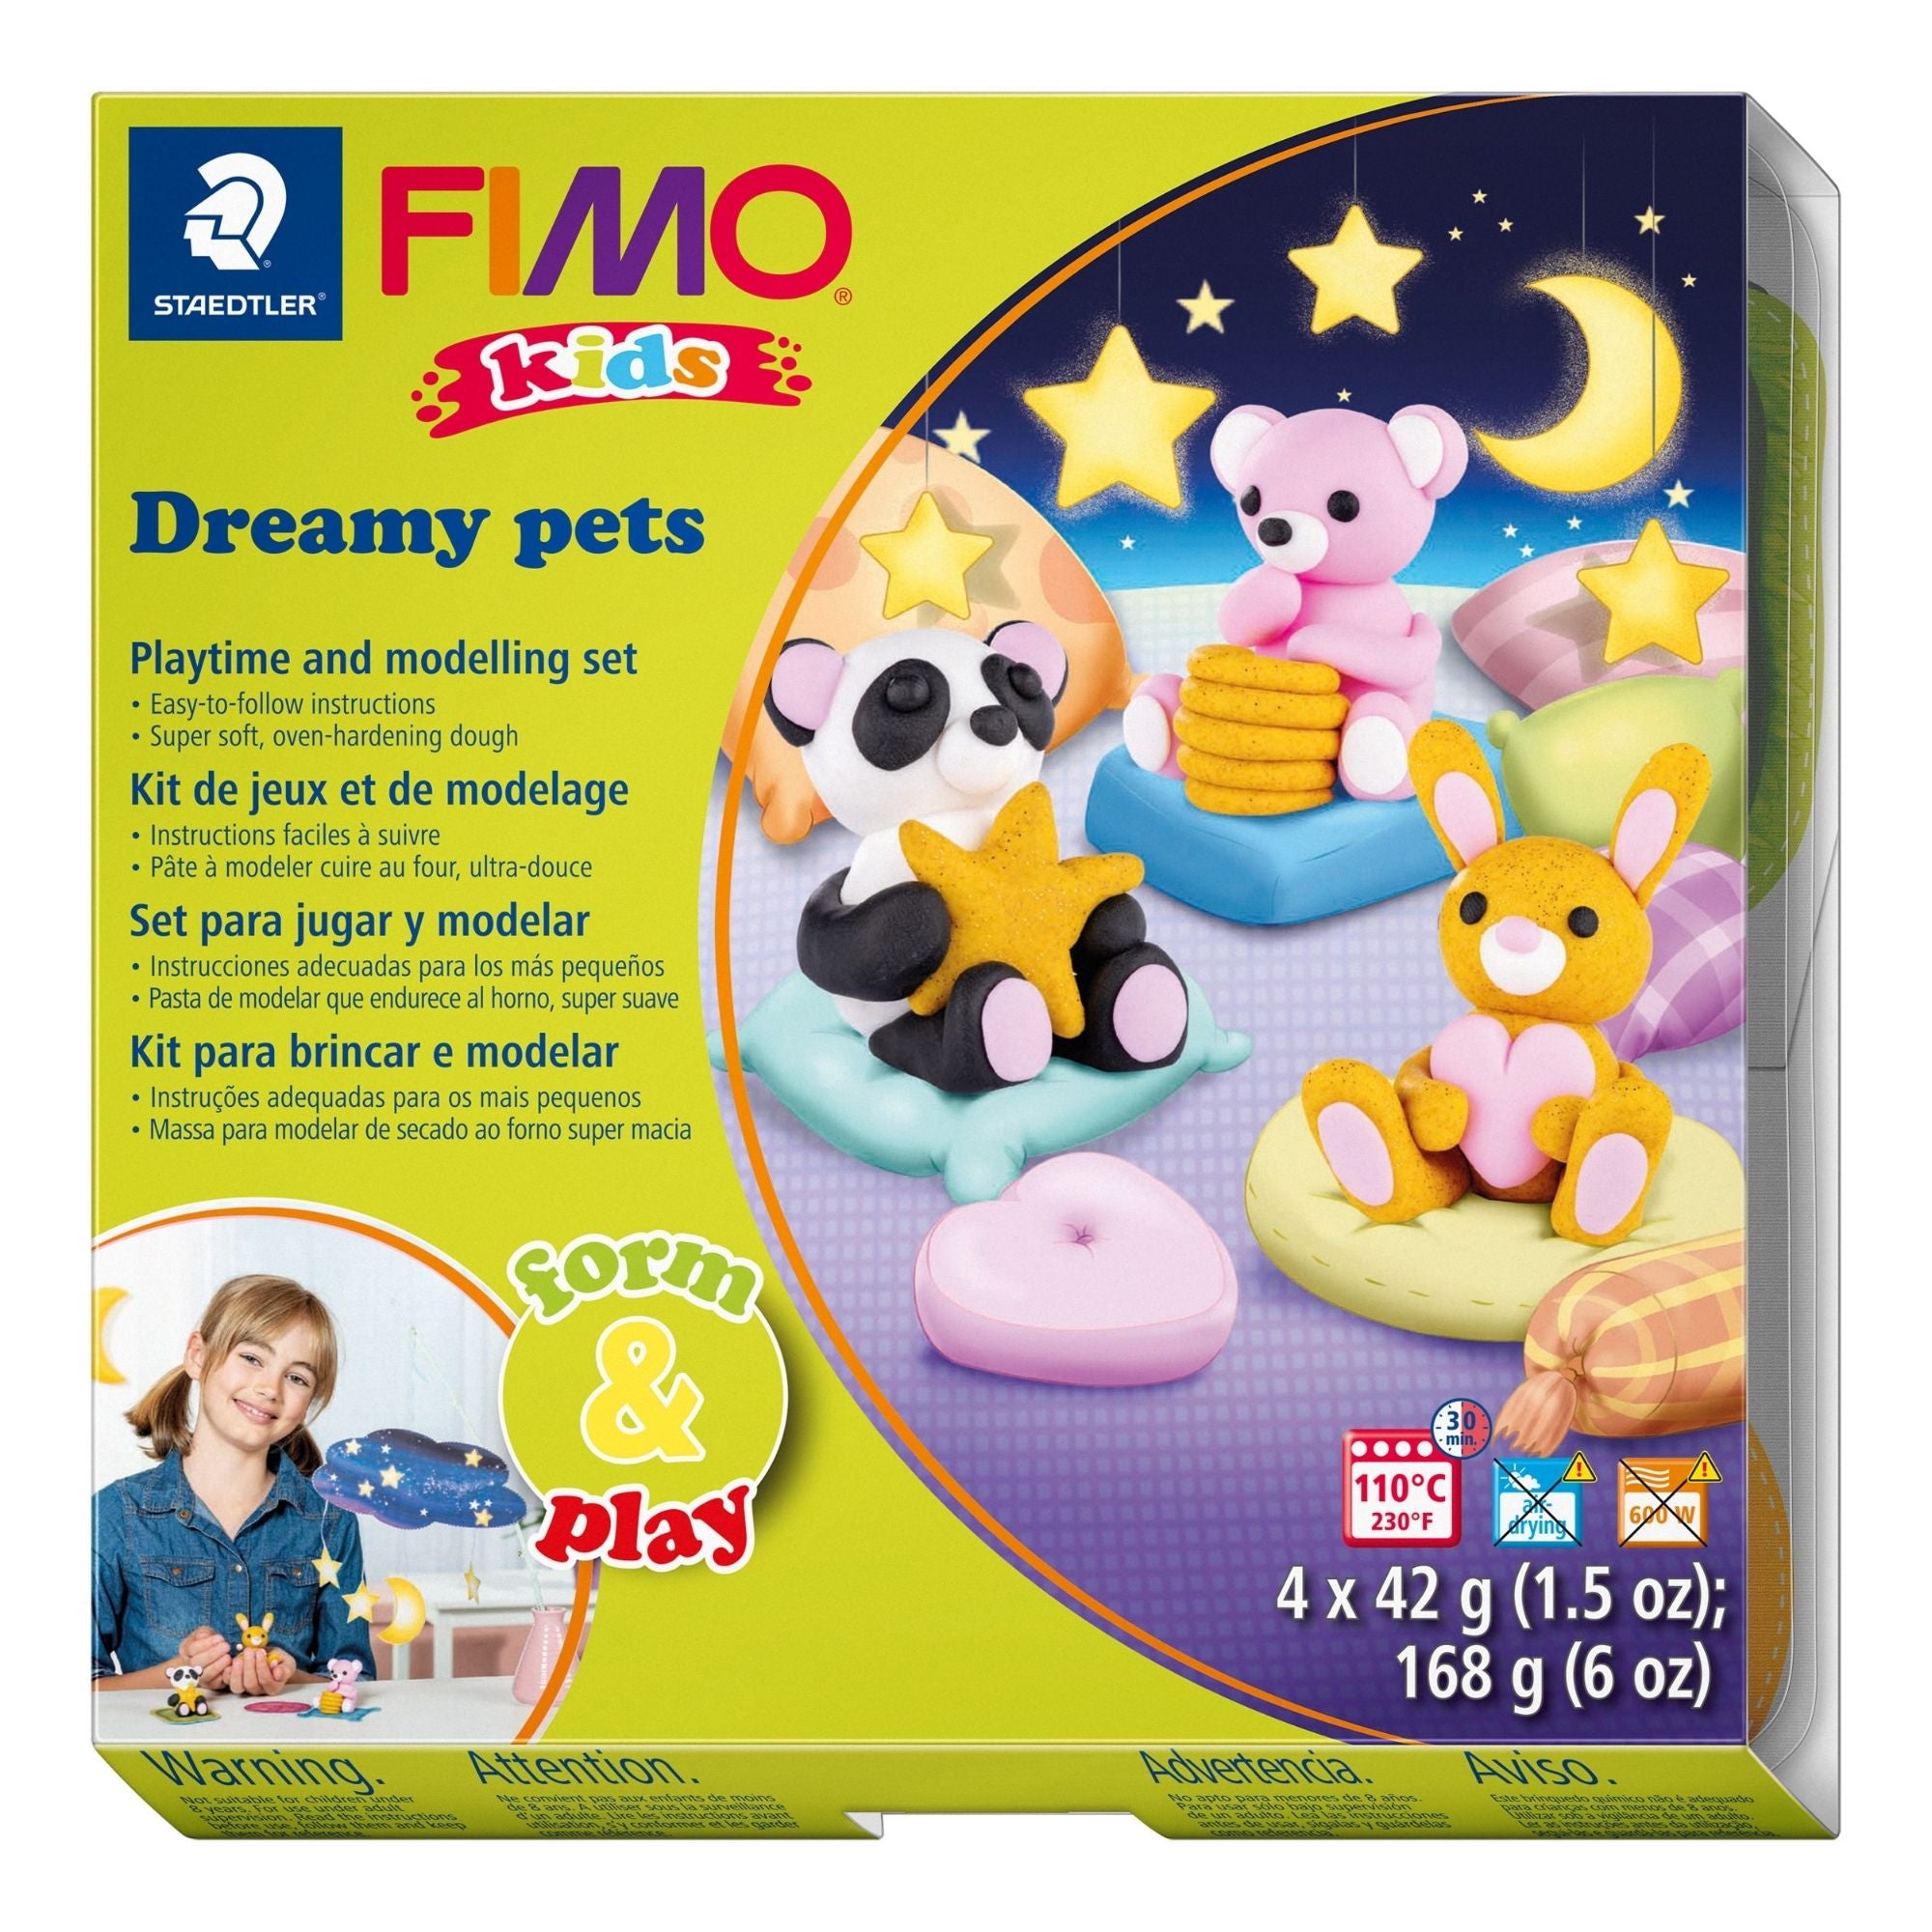 Staedtler Fimo Kids - Dreamy pets